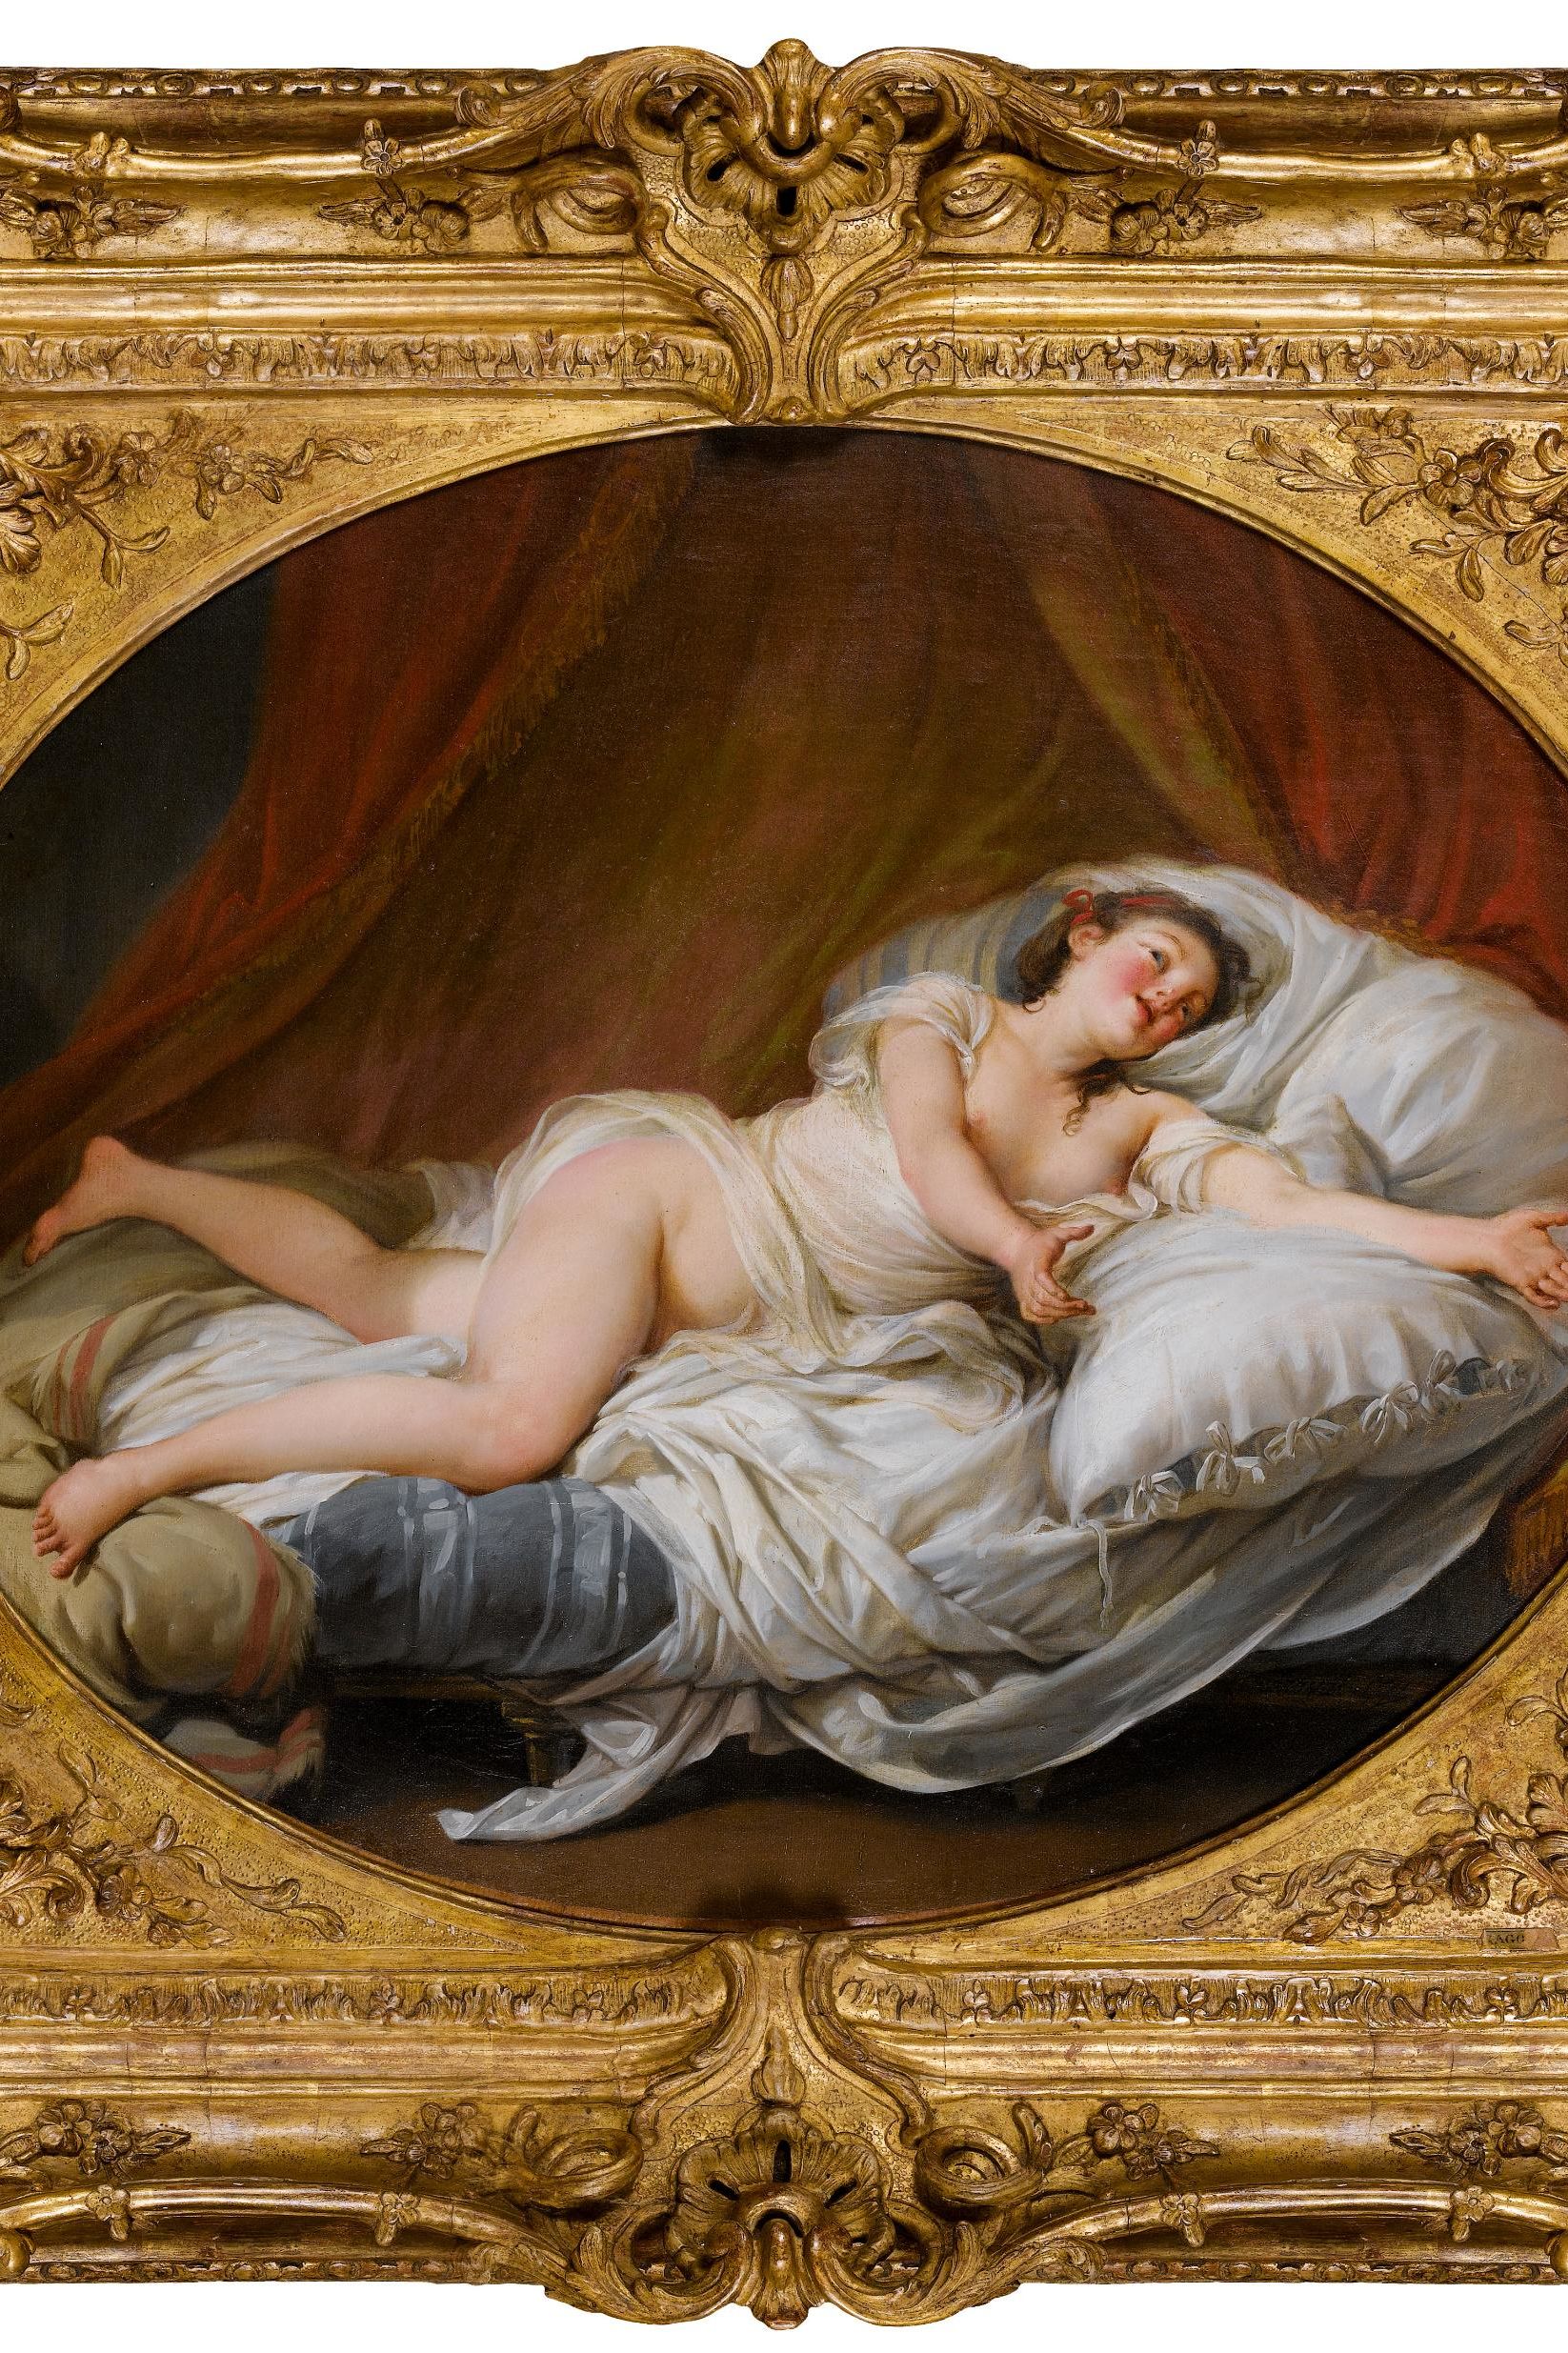 Mythology Erotica - The gender politics behind erotic art | CNN